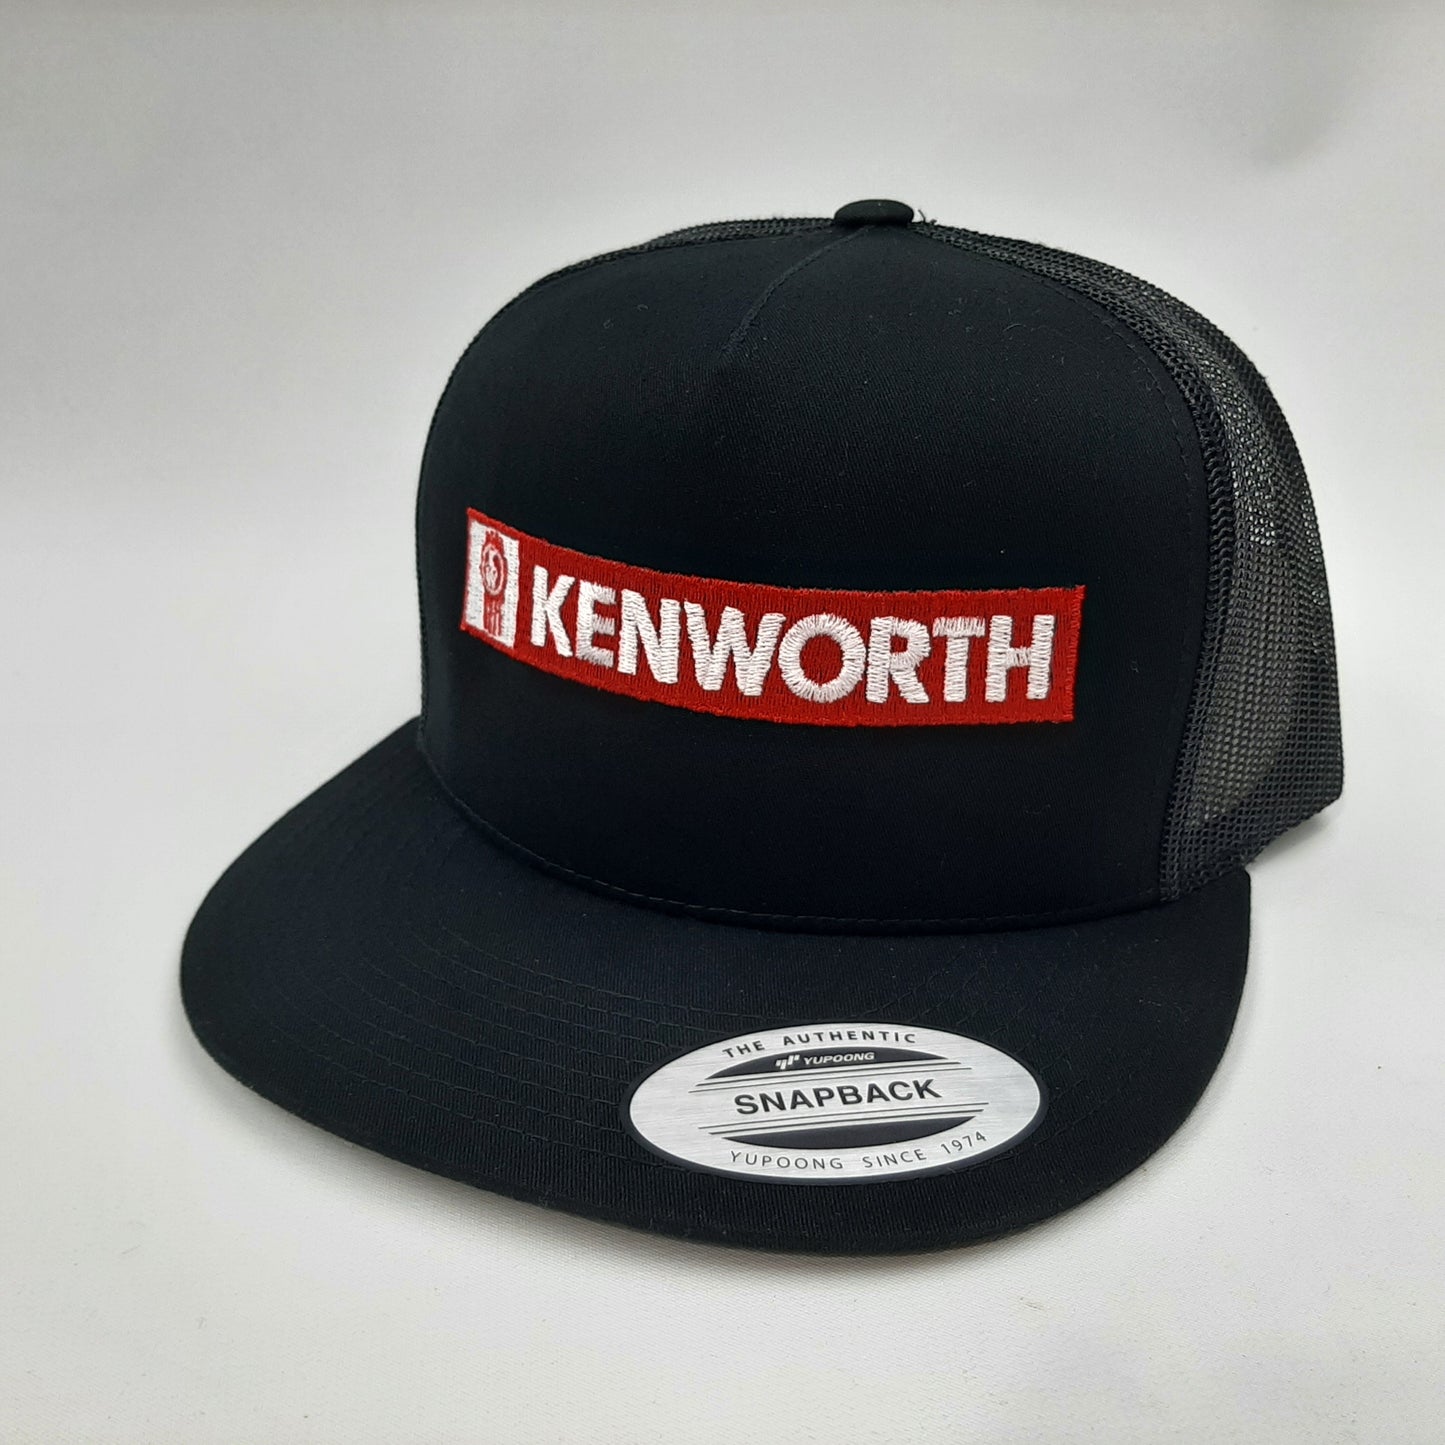 Kenworth Embroidered Flat Bill Trucker Mesh Snapback Cap Hat